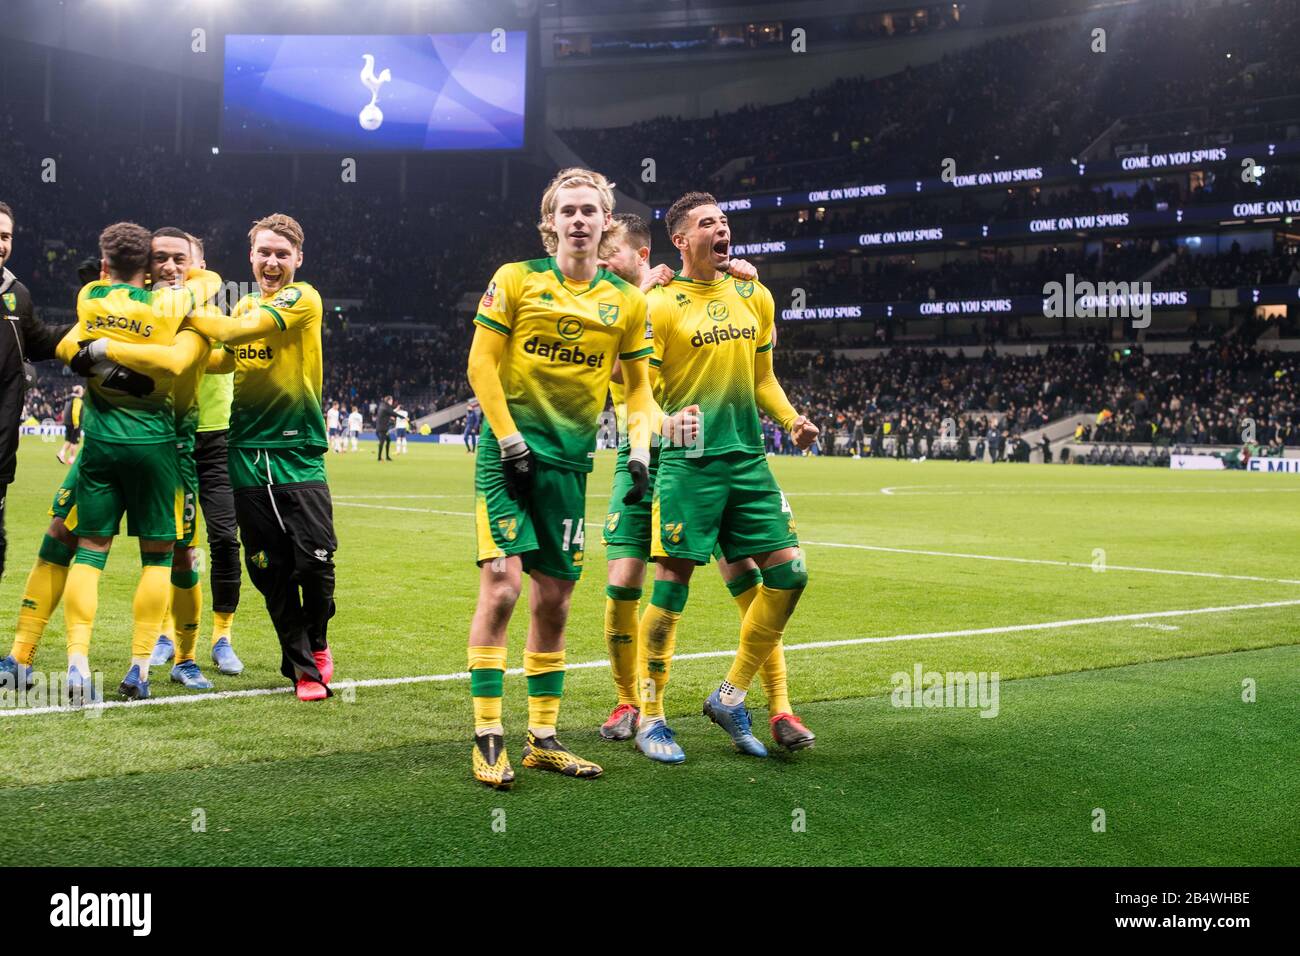 LONDON, ENGLAND - MARCH 04: Tim Krul, Adam Idah, Max Aarons, Grant Hanley, Jamal Lewis, Marco Stiepermann of Norwich City  celebrates after win penalt Stock Photo